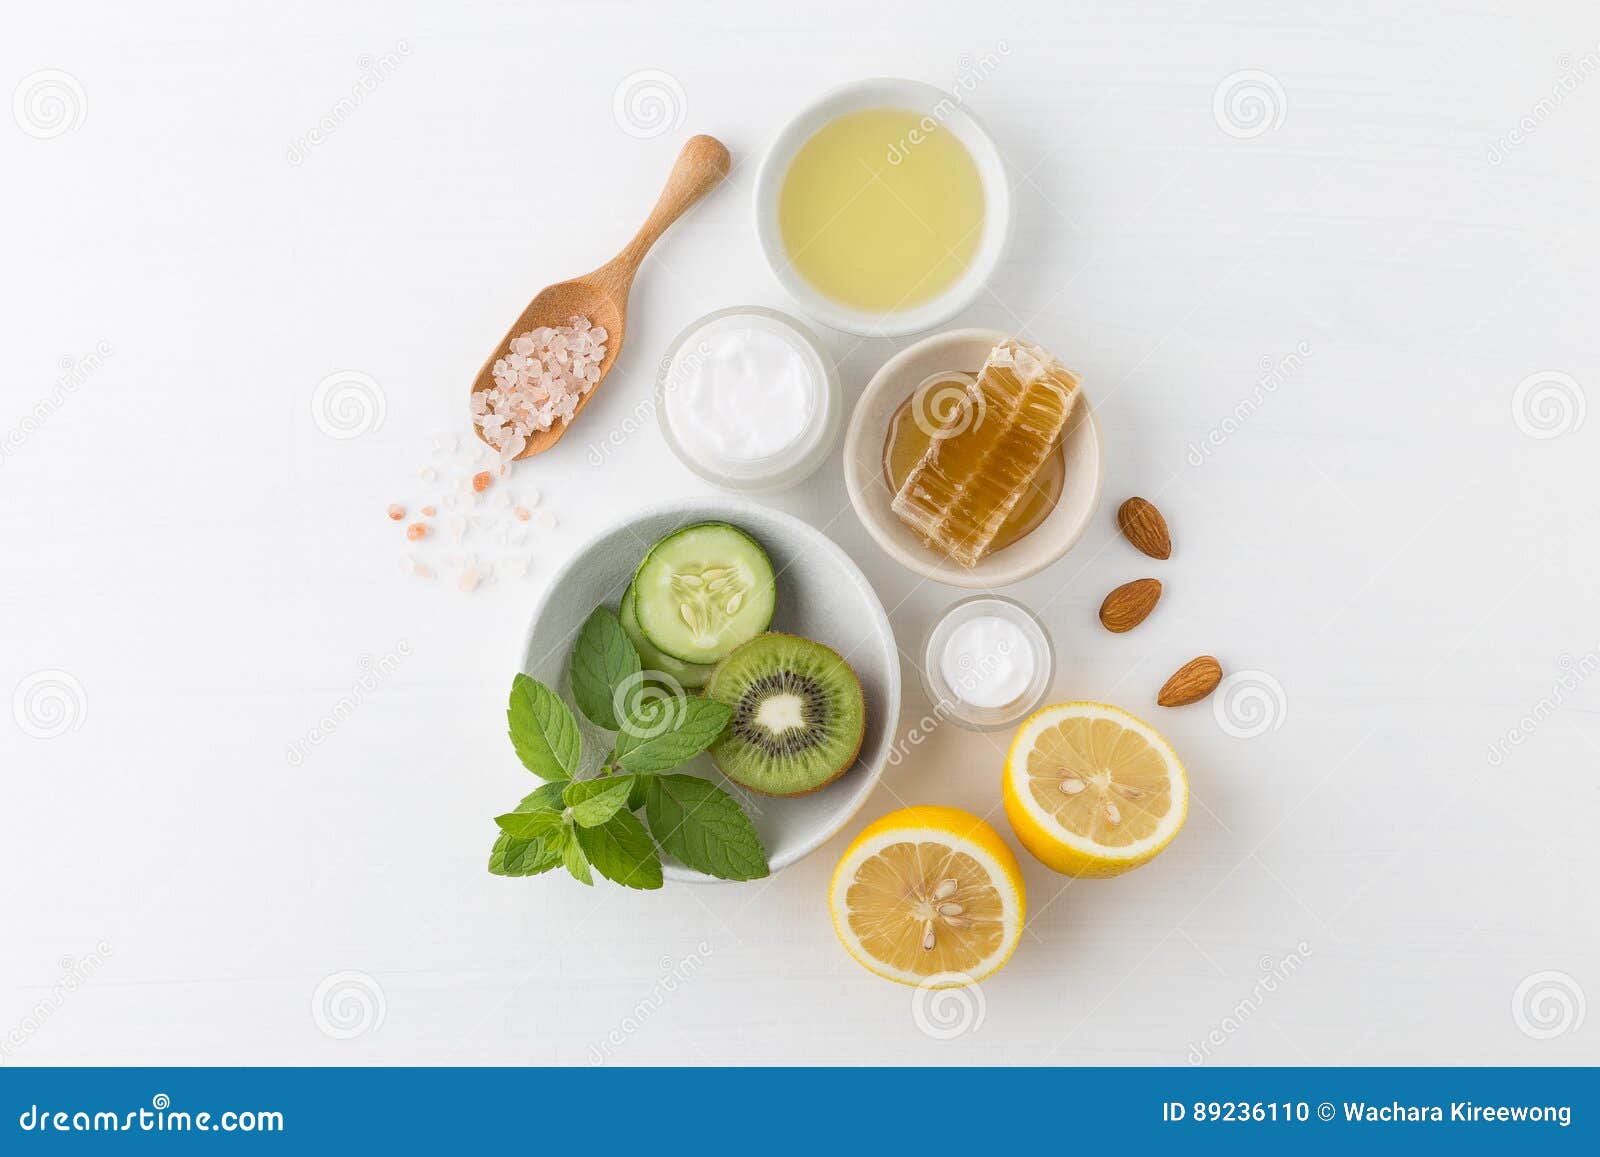 herbal dermatology cosmetic hygienic cream for beauty and skincare product. honey, lemon, kiwi, cucumber, salt, mint, oil on whit